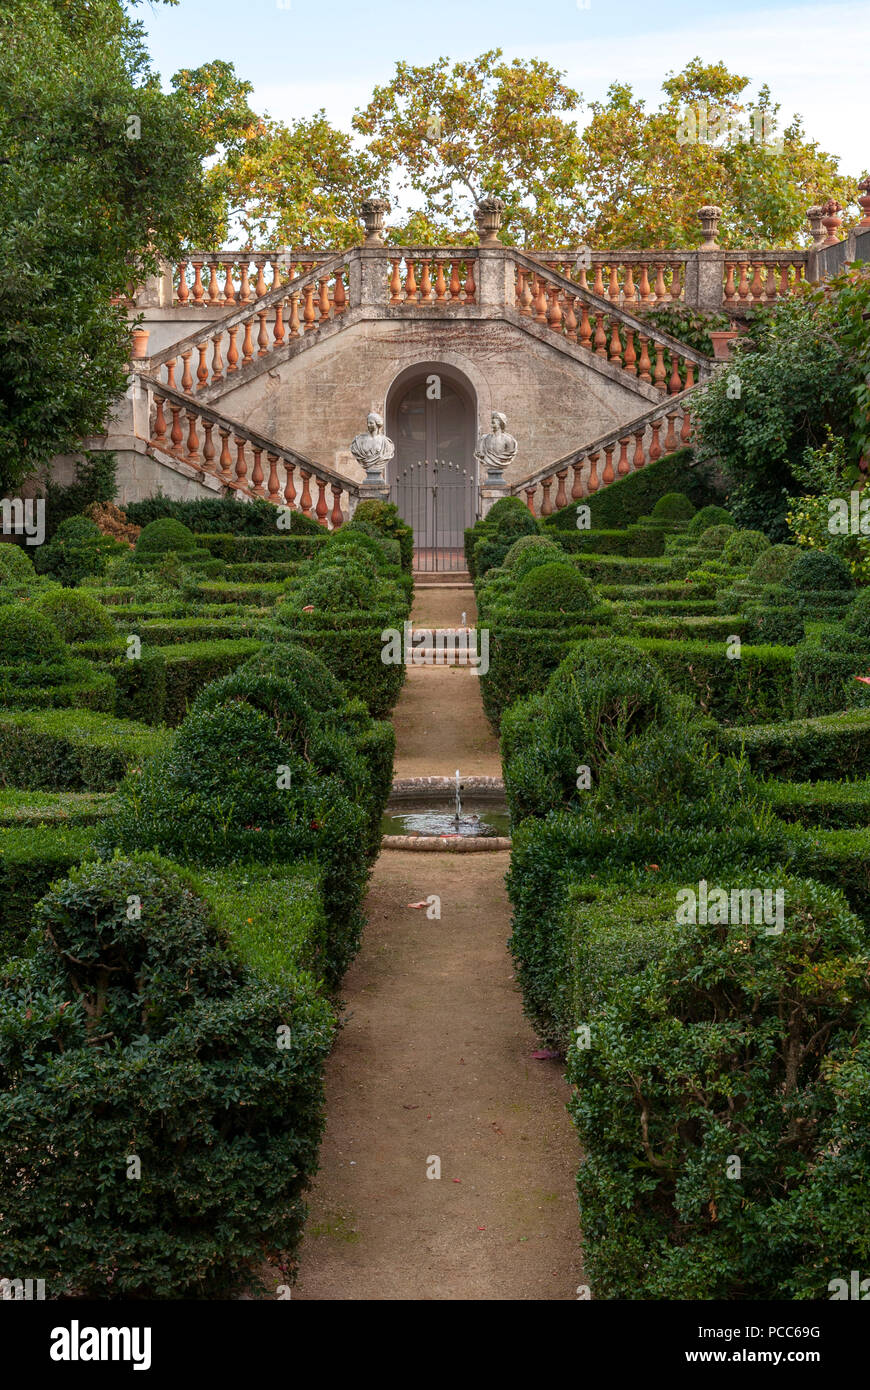 Barcellona, Parc del Laberint d'Horta, Buchsbaumgarten mit Treppe doppelläufiger. Entwicklung von 1791 bis 1880. Barcellona Catalogna |Parc del Foto Stock